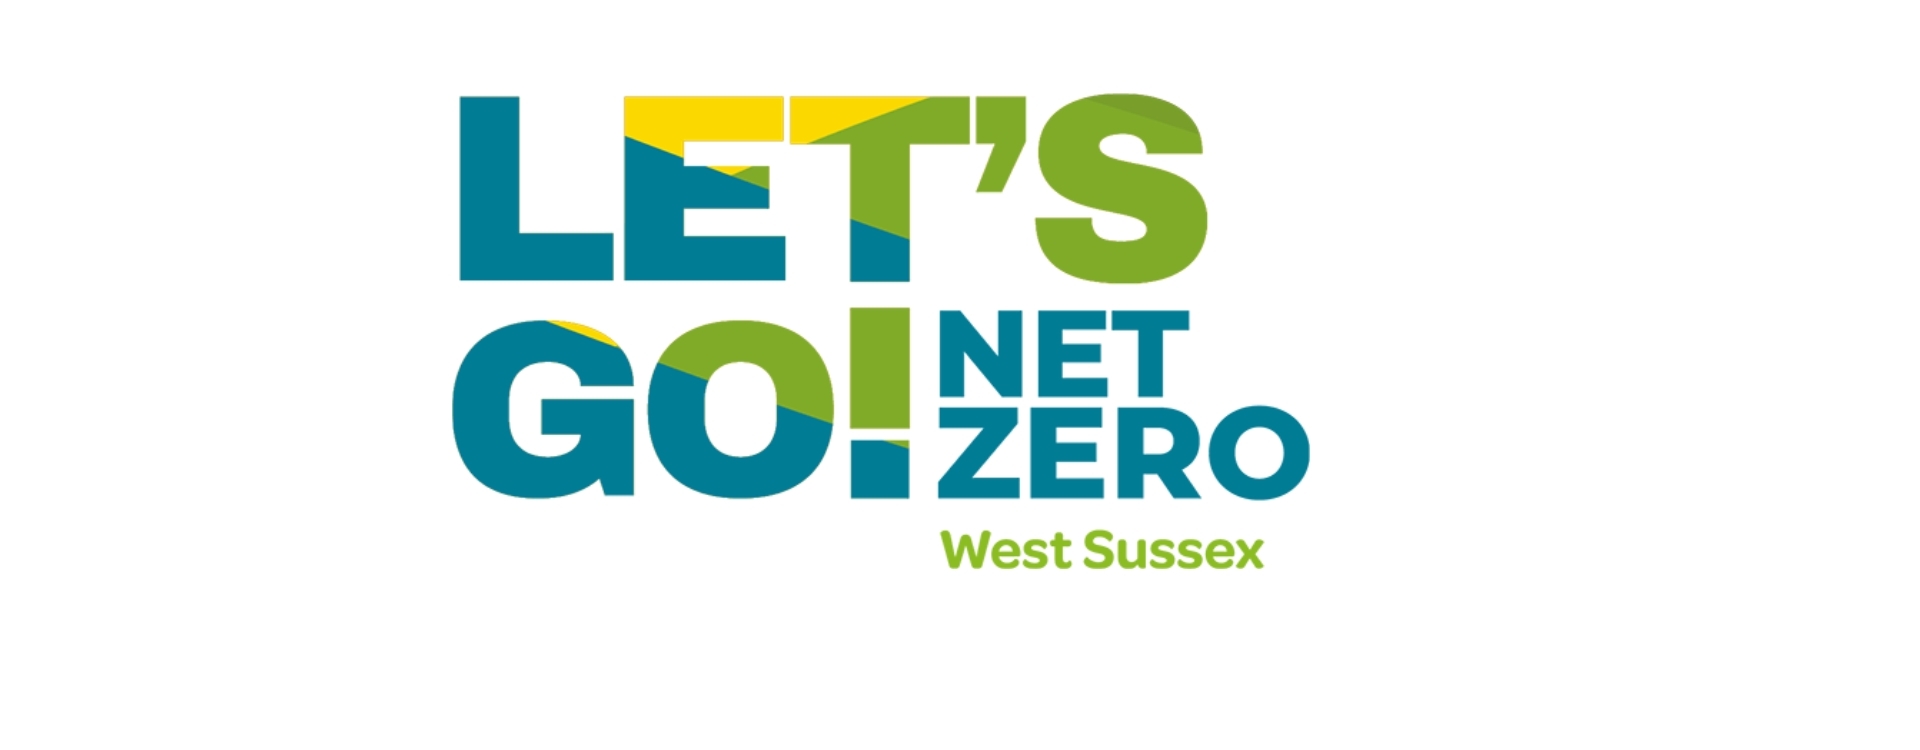 Let's Go! Net Zero - Sustainable Manufacturing event in Haywards Heath